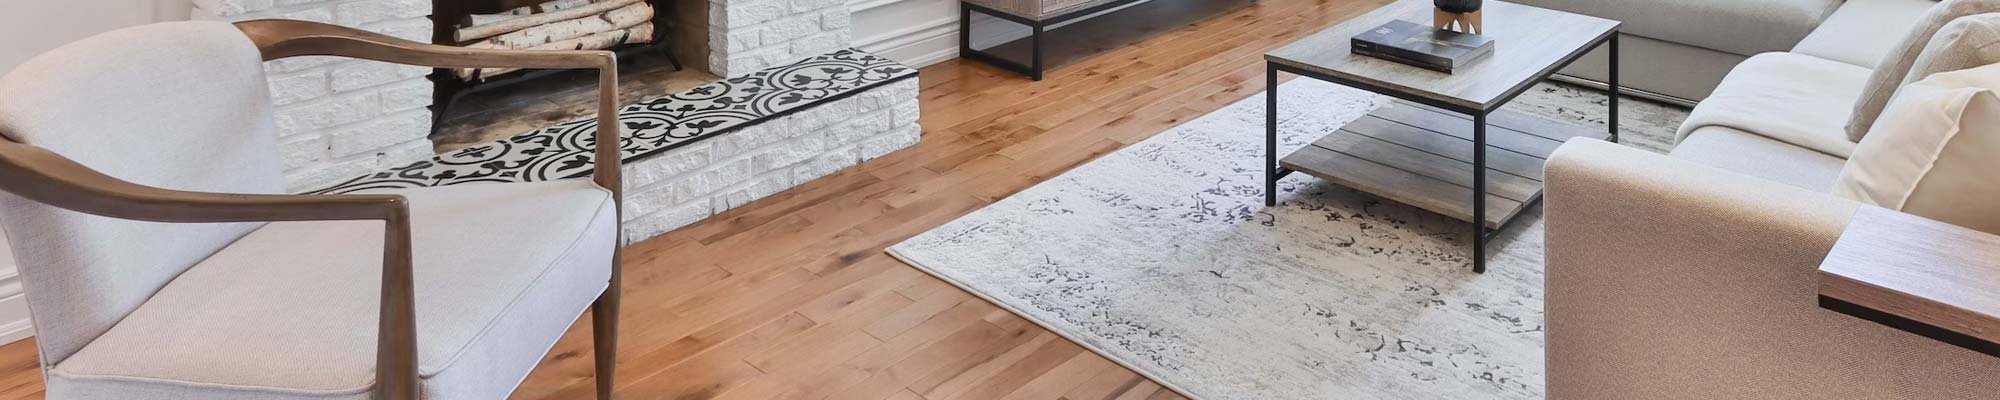 View CC Carpet’s Flooring Product Catalog